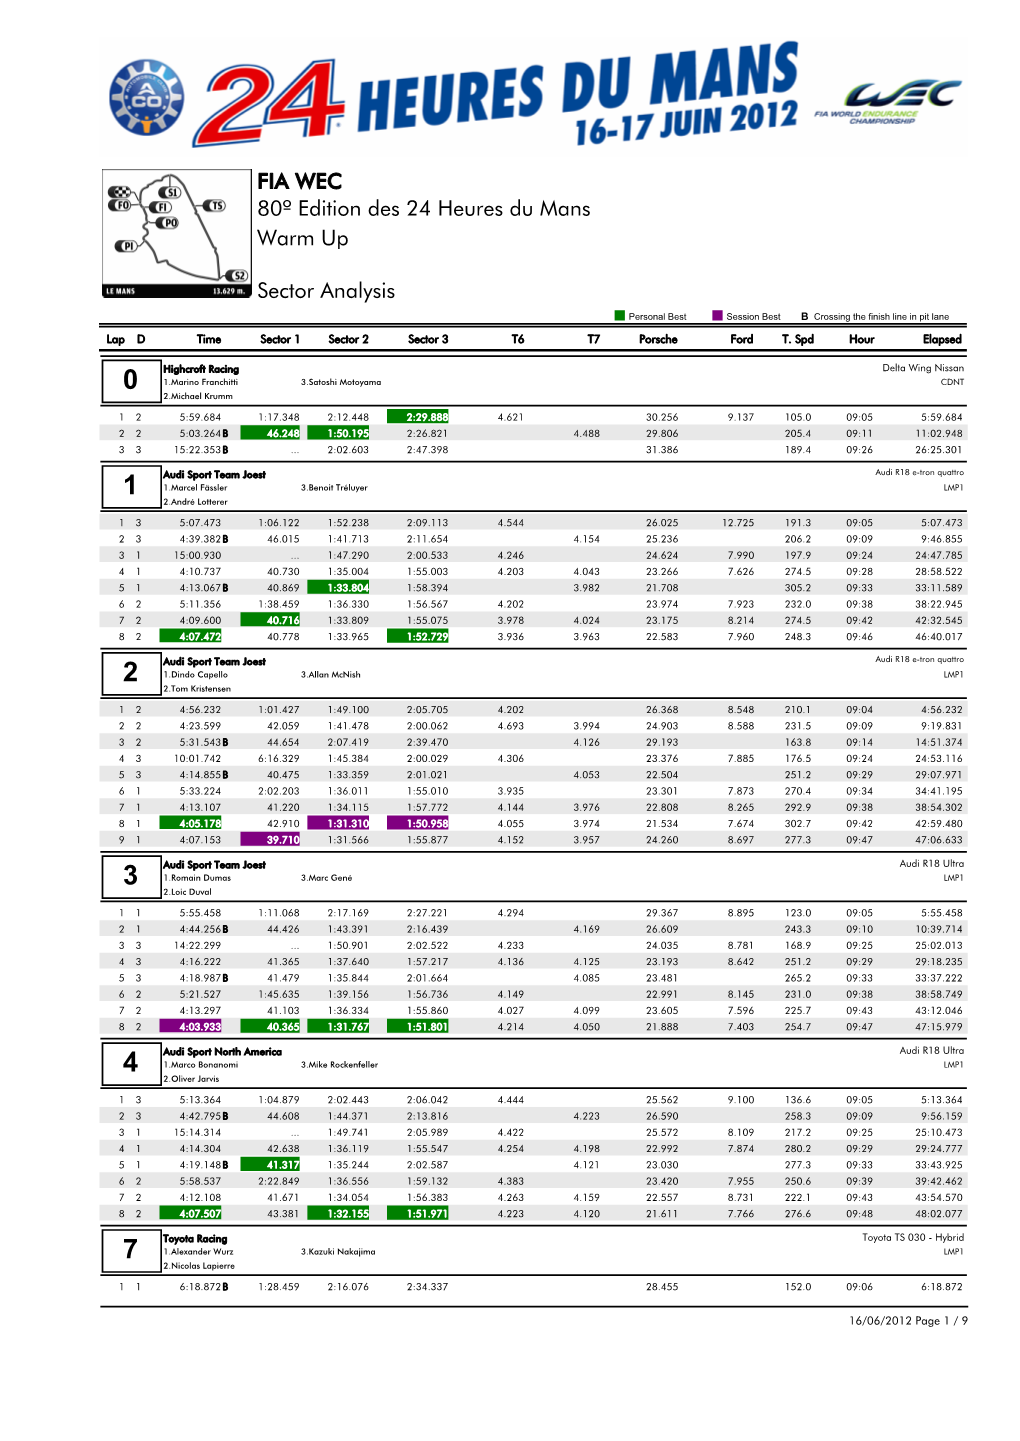 Warm up 80º Edition Des 24 Heures Du Mans Sector Analysis FIA